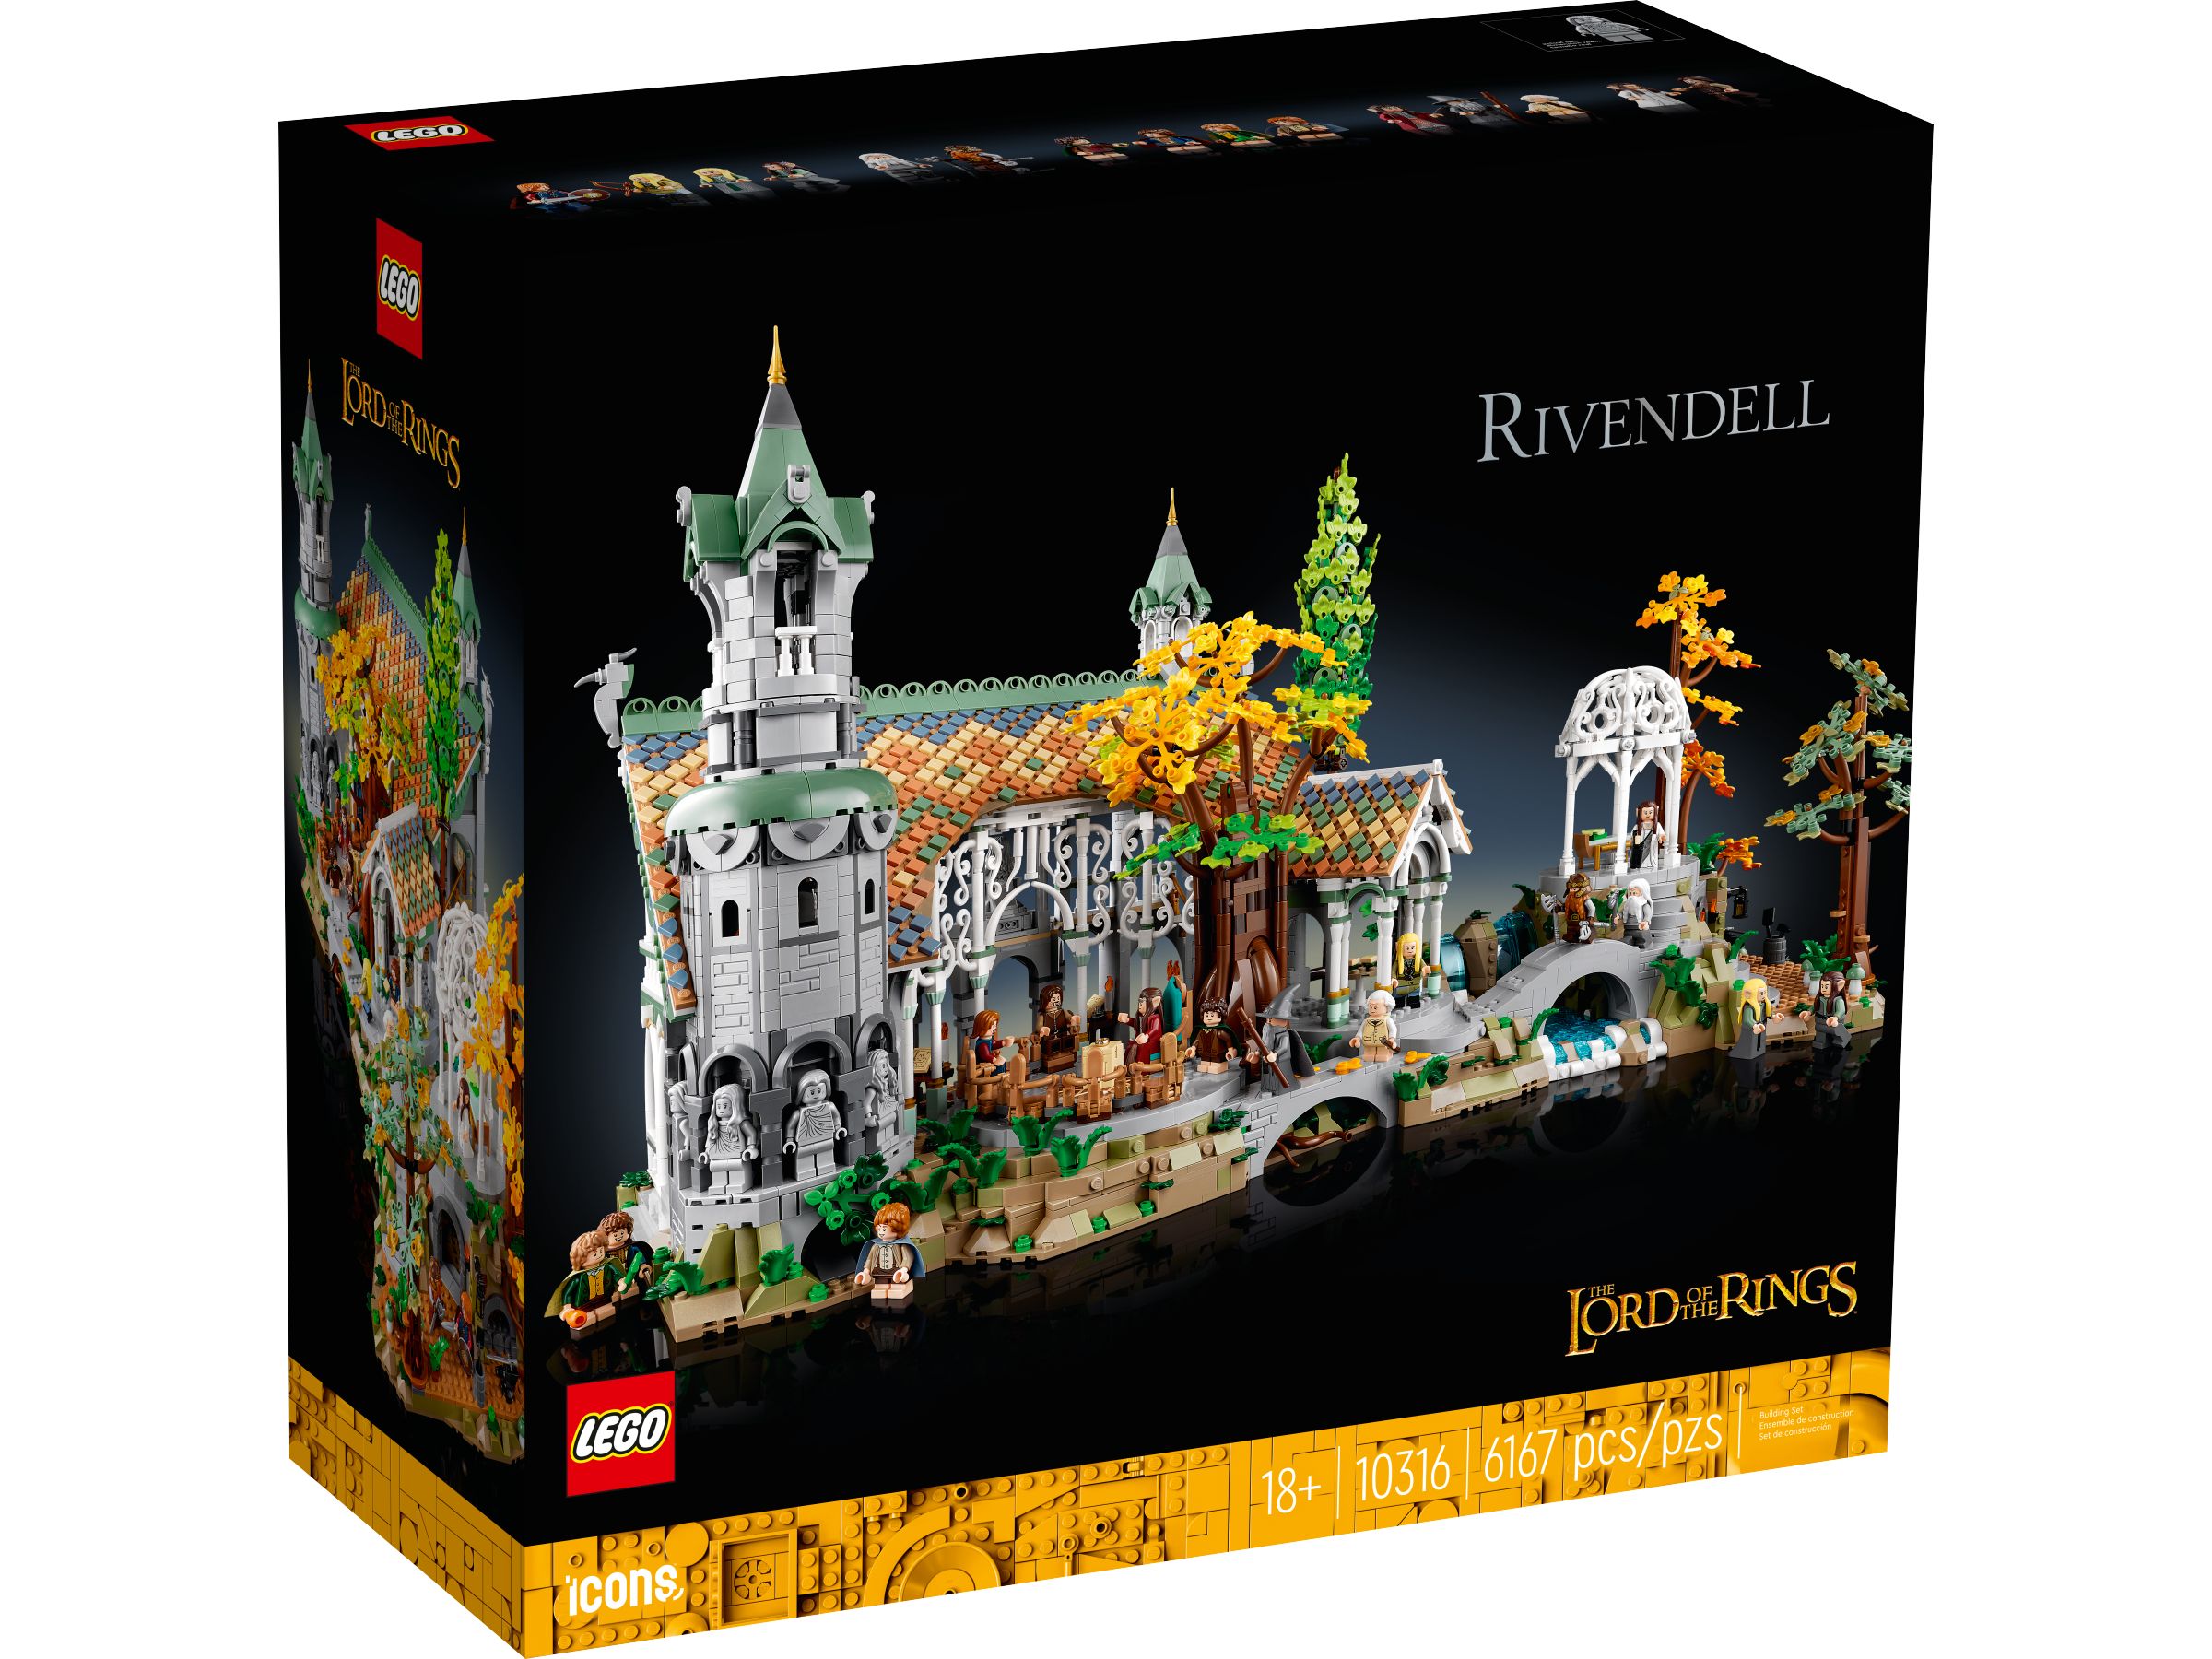 LEGO Advanced Models 10316 Herr der Ringe - Bruchtal LEGO_10316_Box1_v39.jpg